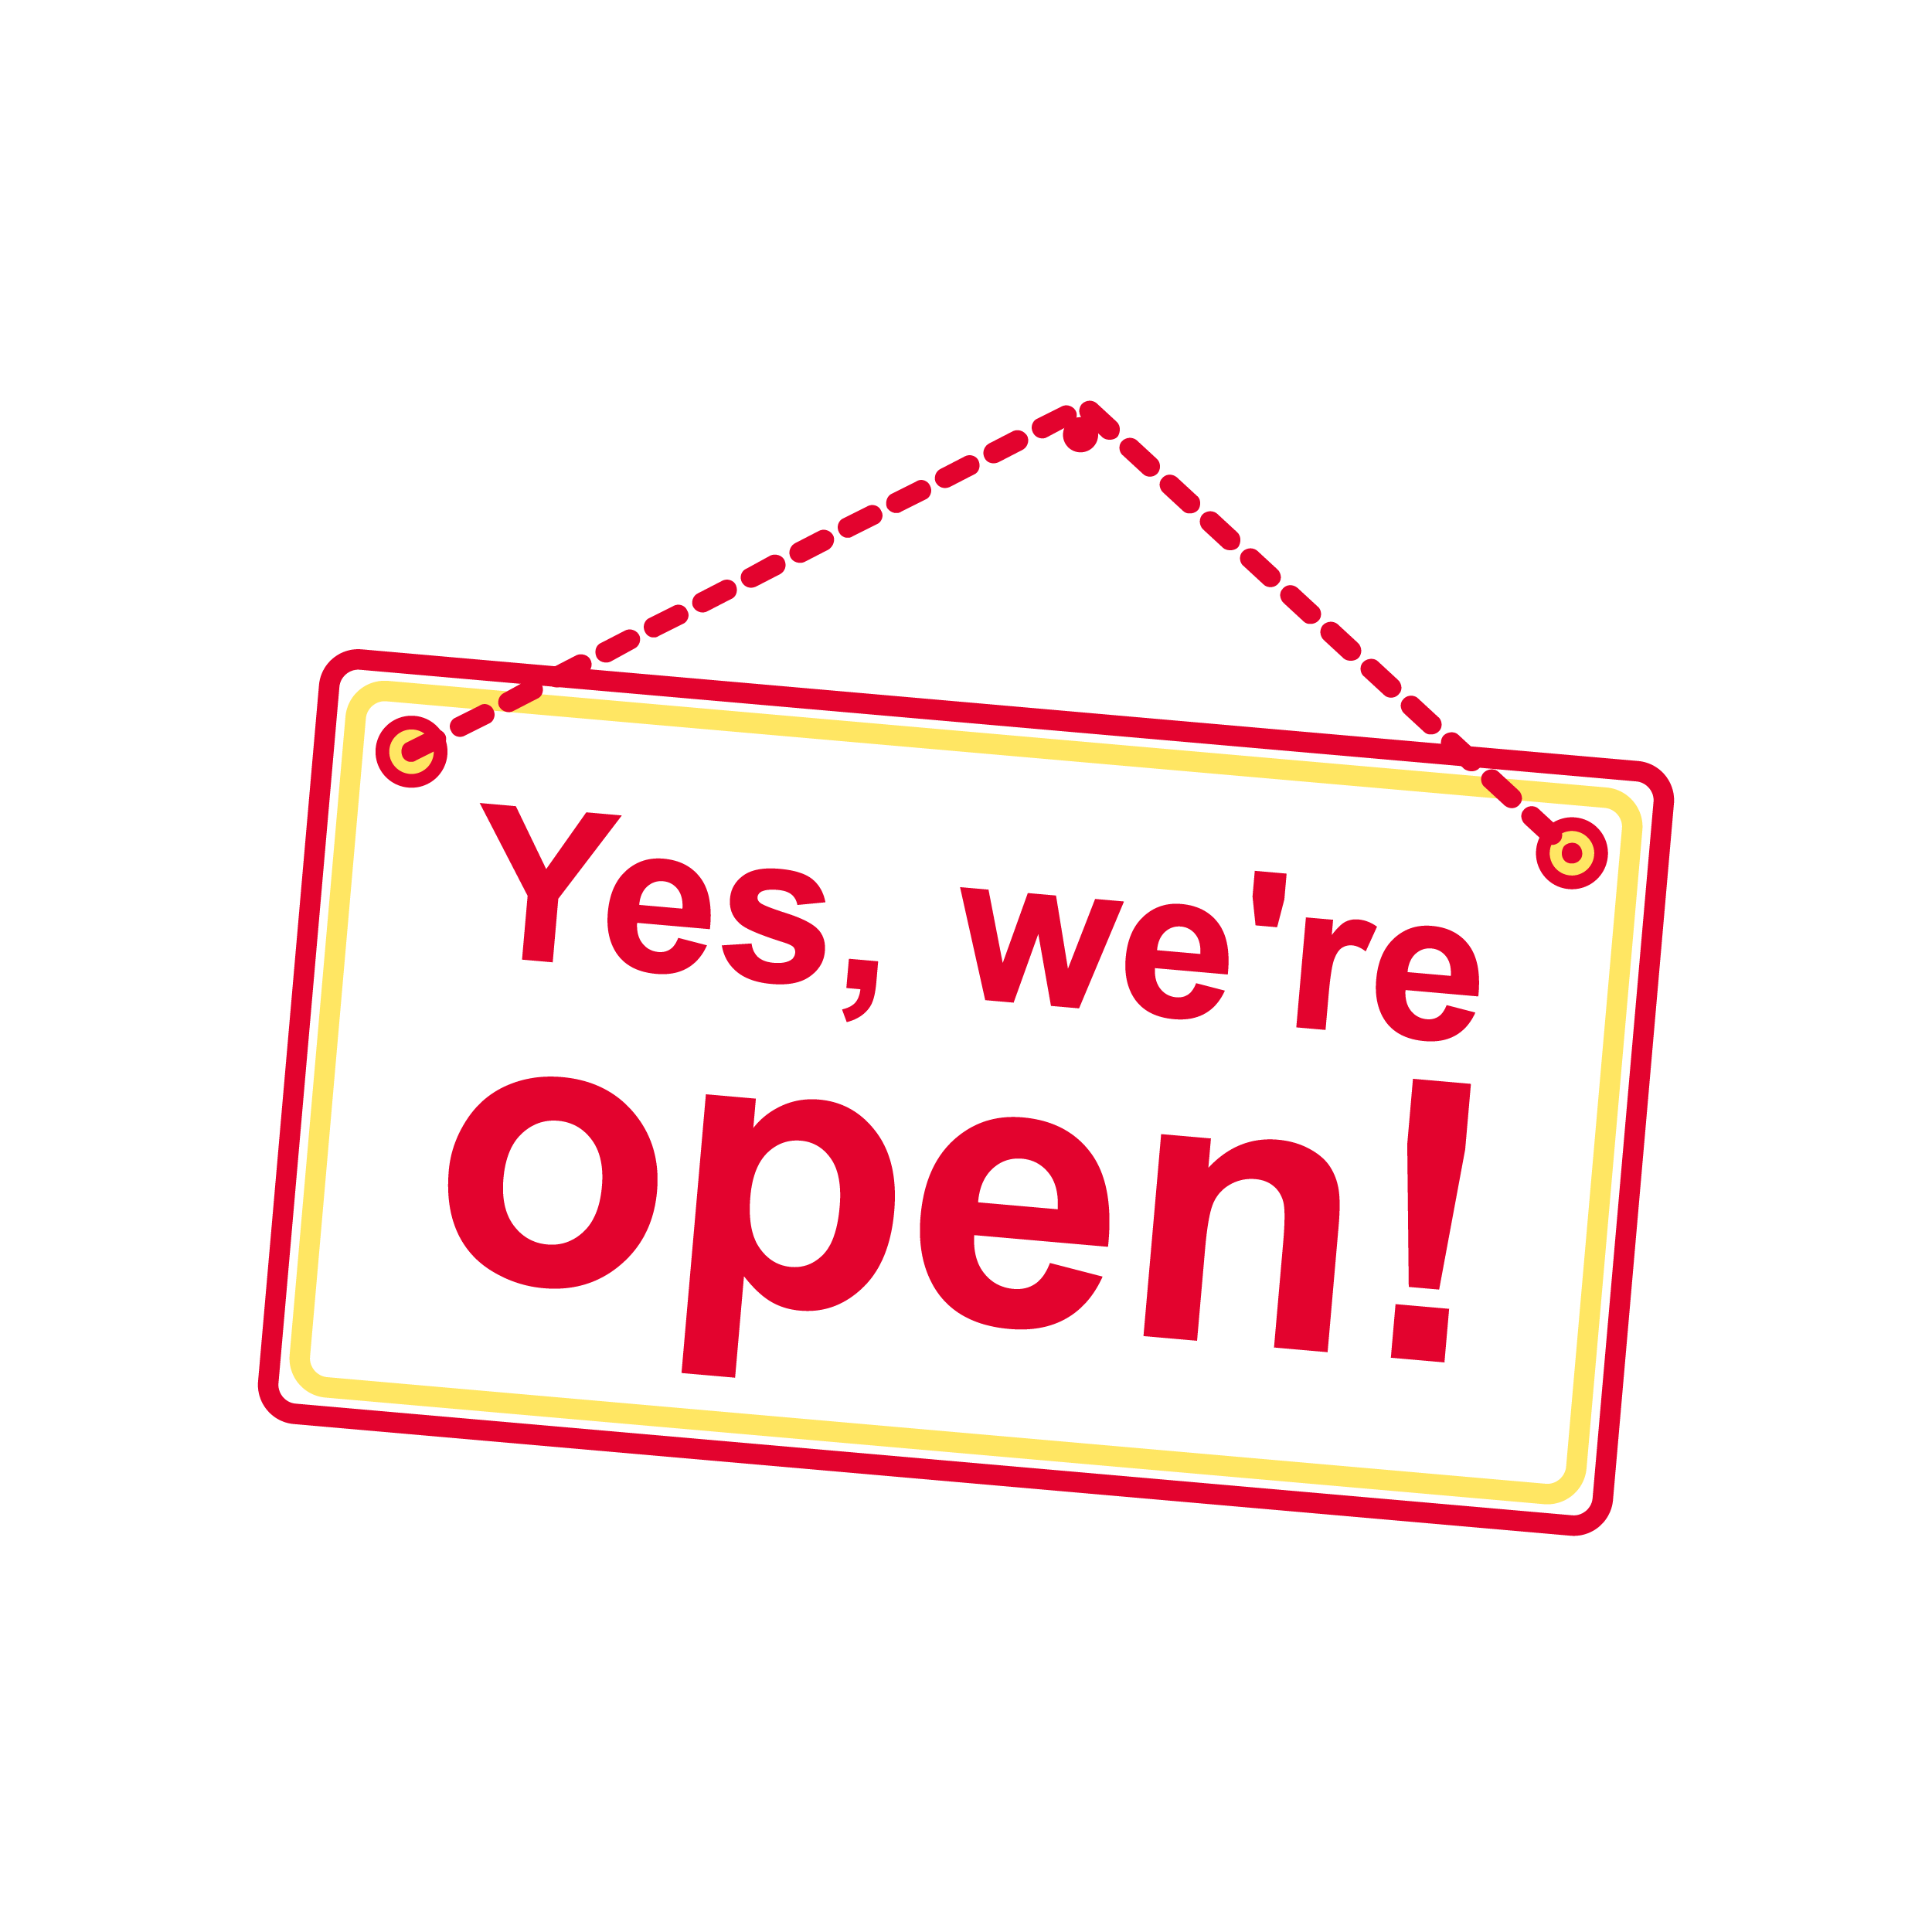 Logo saying "Yes we're open"